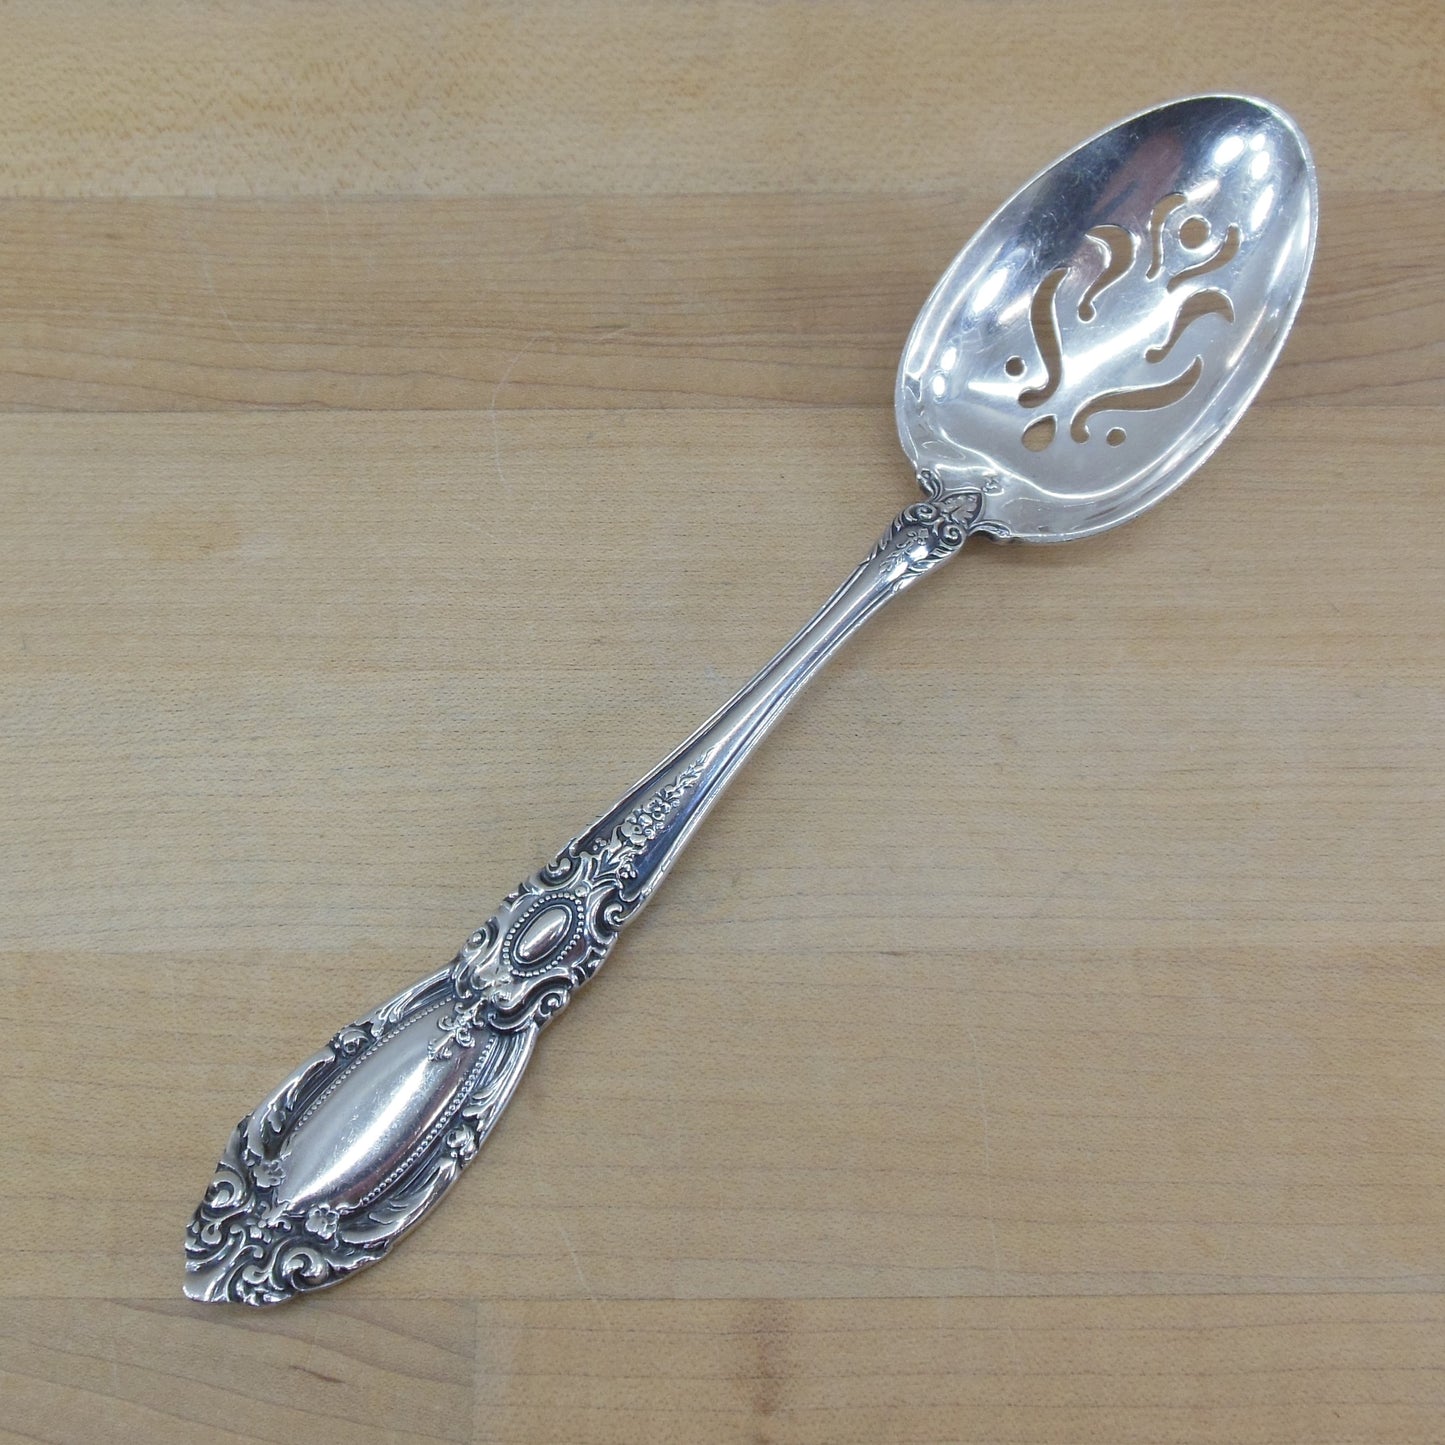 Towle King Richard Sterling Silver Flatware - Pierced Serving Spoon vintage